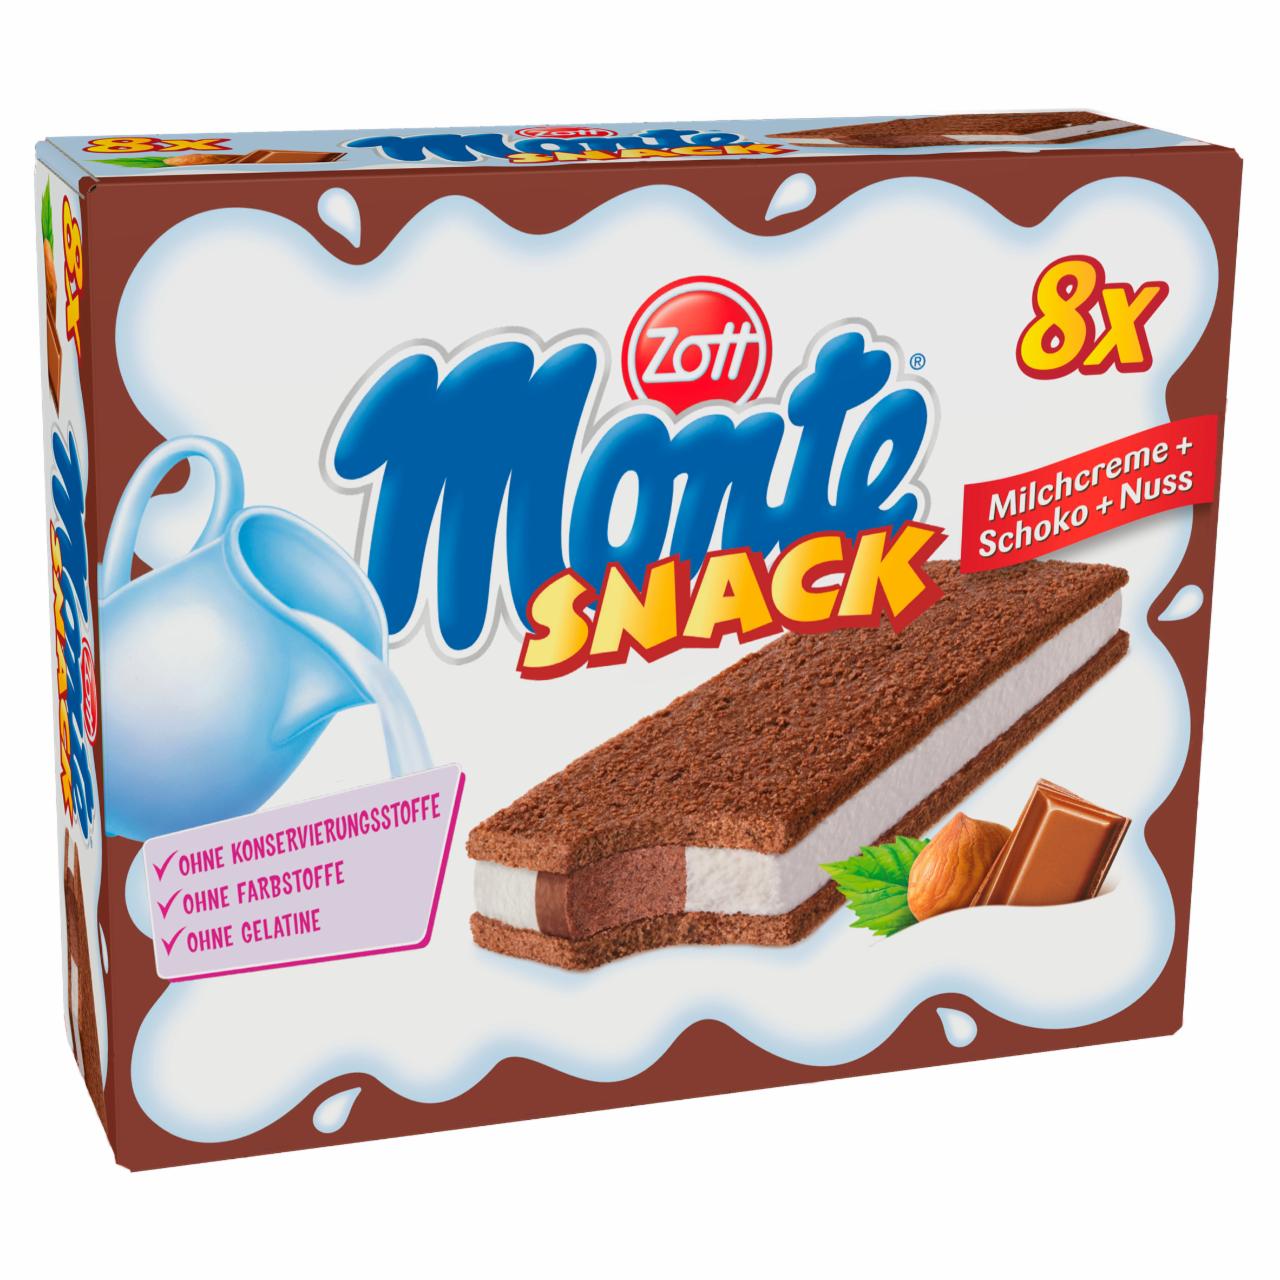 Zdjęcia - Zott Monte Snack Ciastko z kremem 232 g (8 x 29 g)